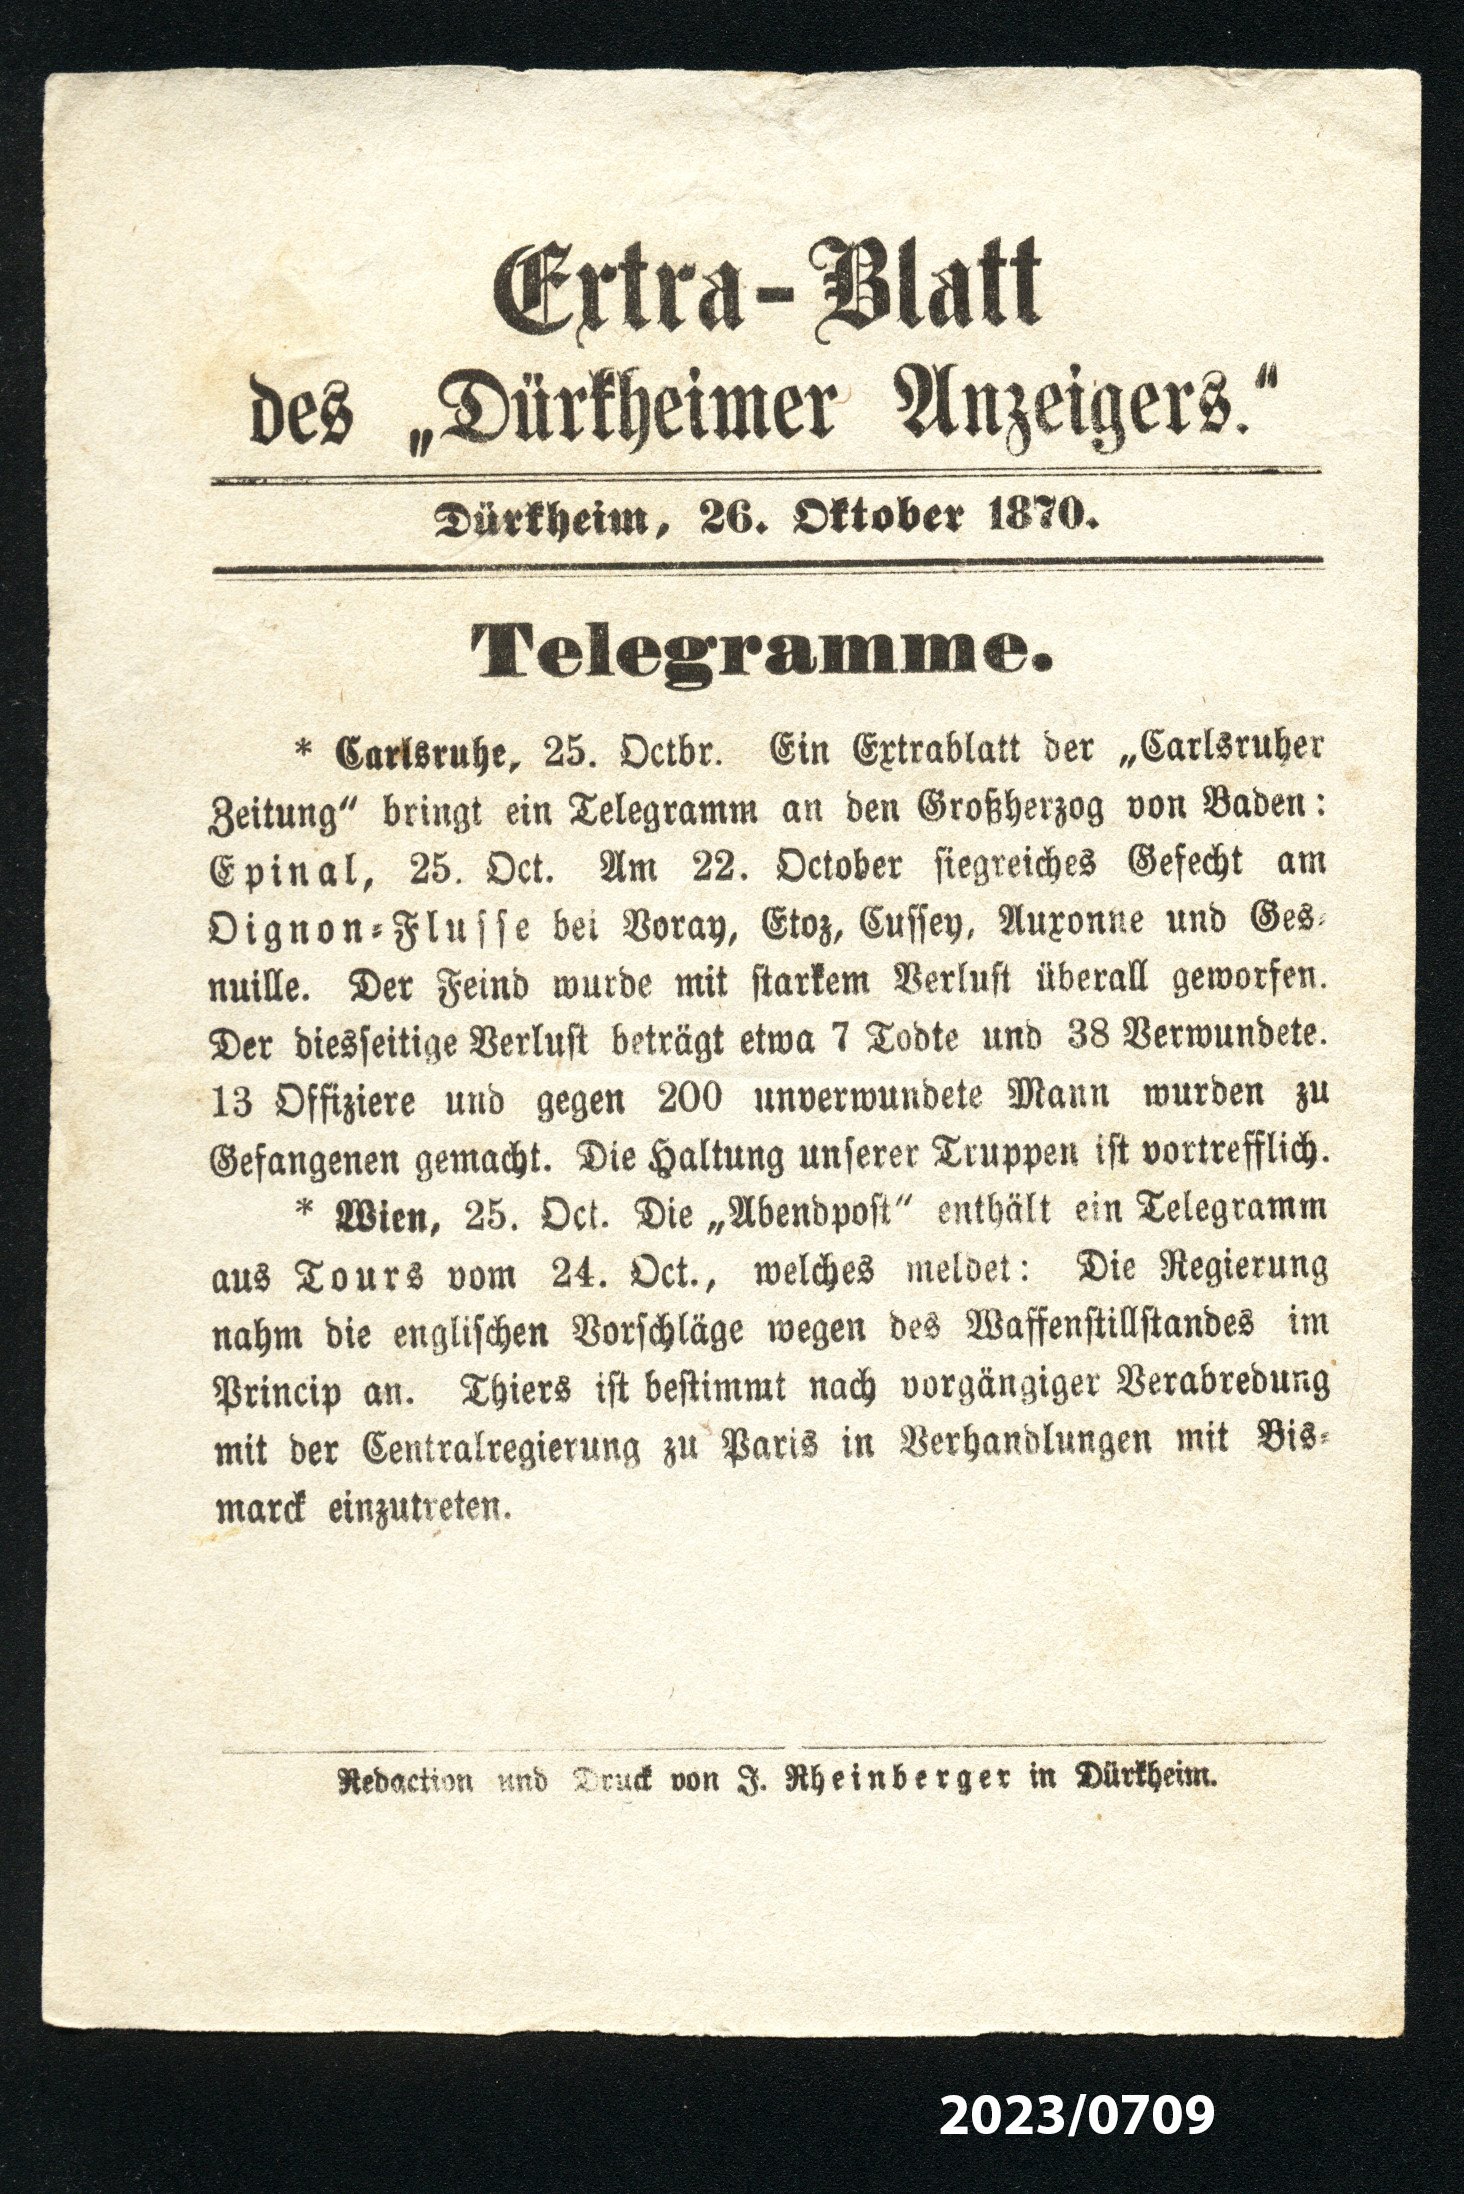 Extra-Blatt des "Dürkheimer Anzeigers." 26.10.1870 (Stadtmuseum Bad Dürkheim im Kulturzentrum Haus Catoir CC BY-NC-SA)